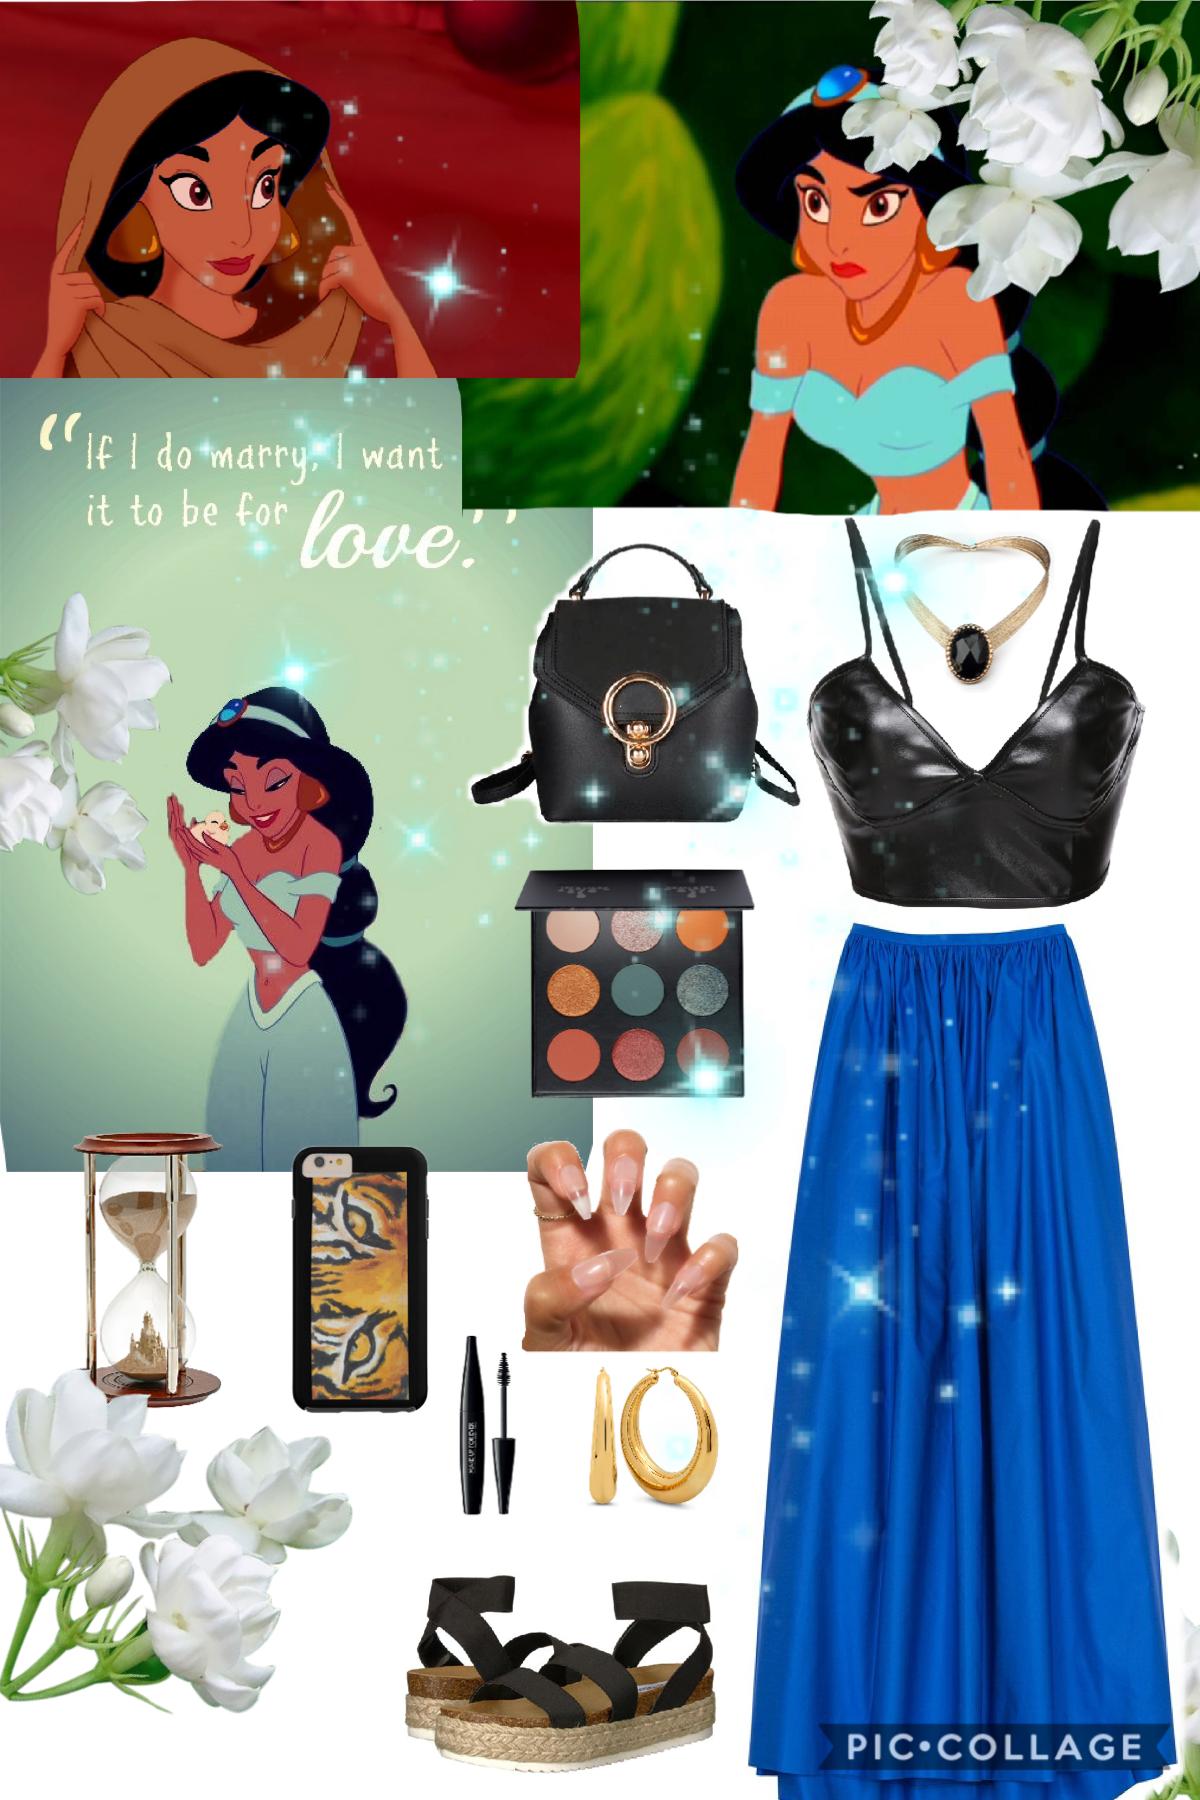 princess jasmine 💙

#Blue #Princess #Jasmine #Aladdin #MakeUp #Necklace #Blue #Collage #JasmineFlower #Flower #White #Nails #PicCollage #Disney #Movie #DisneyPrincess